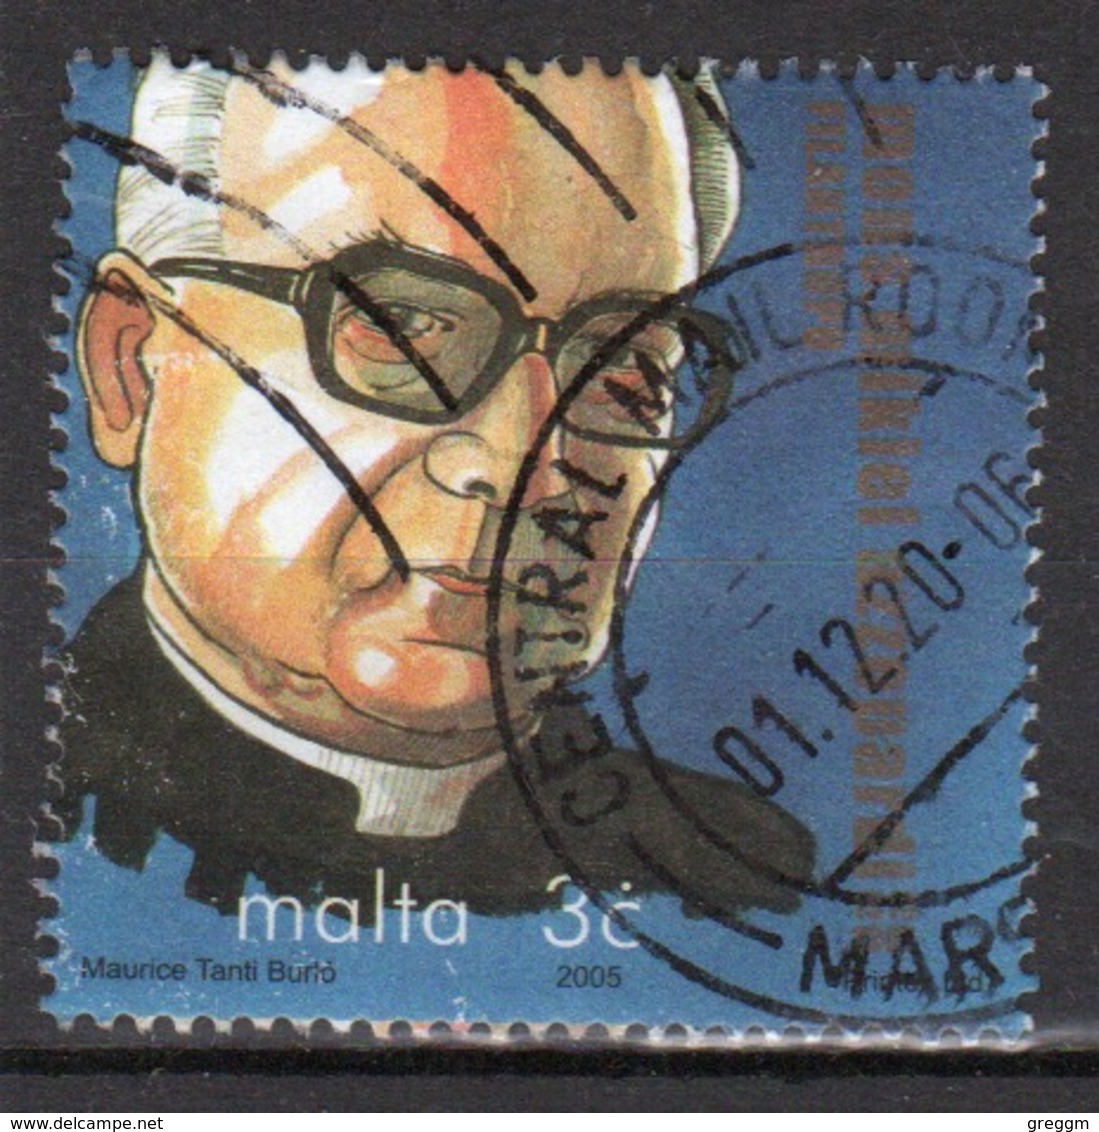 Malta 2005 Single 3c Stamp To Celebrate Personalities. - Malta